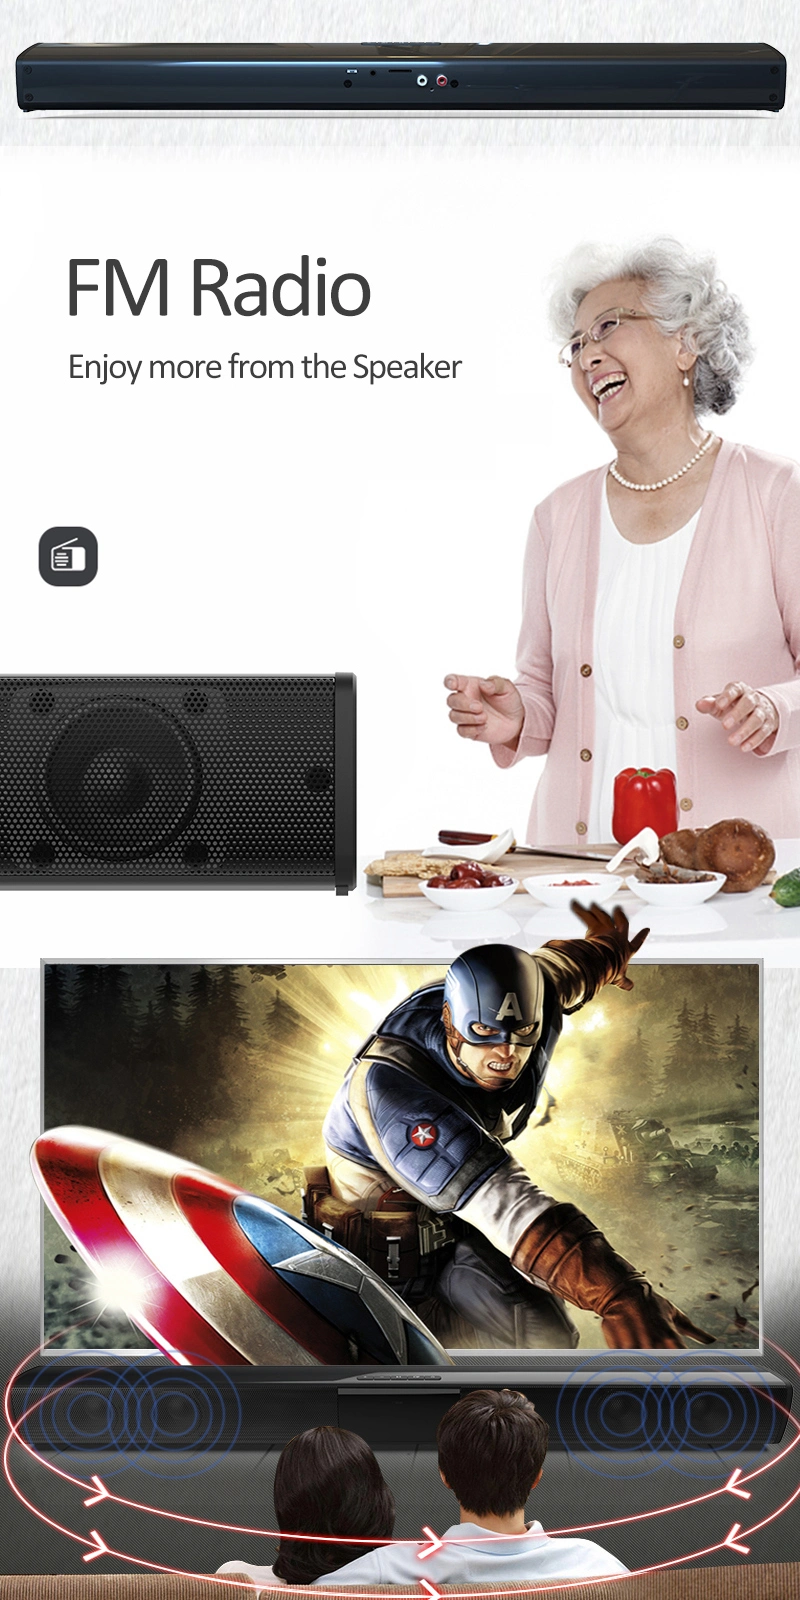 Professional Audio Wireless Bluetooth Speaker System TV Home Theater Soundbar Subwoofer